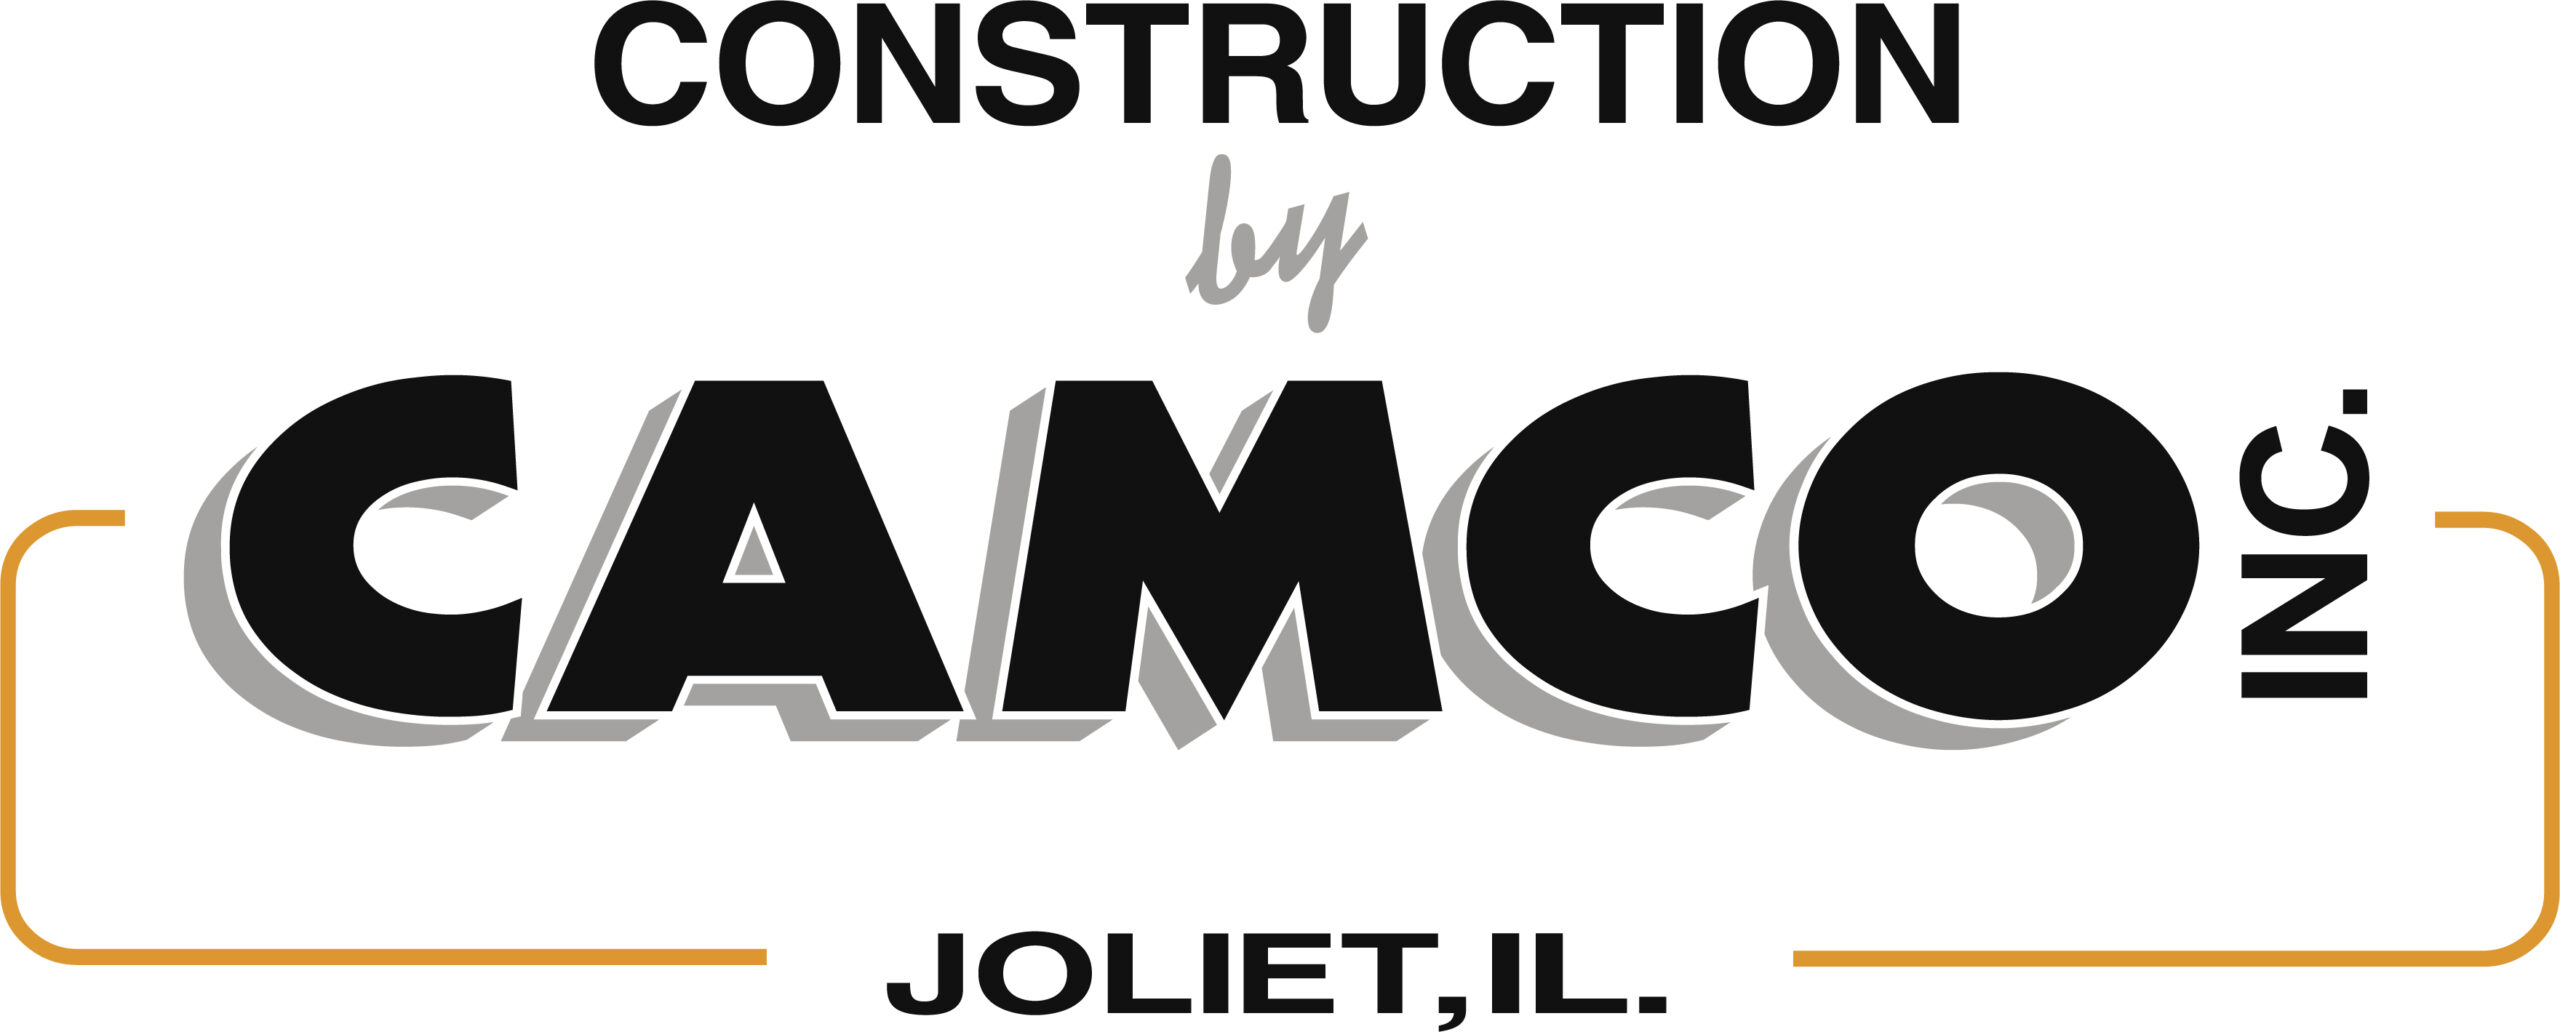 CAMCO logo